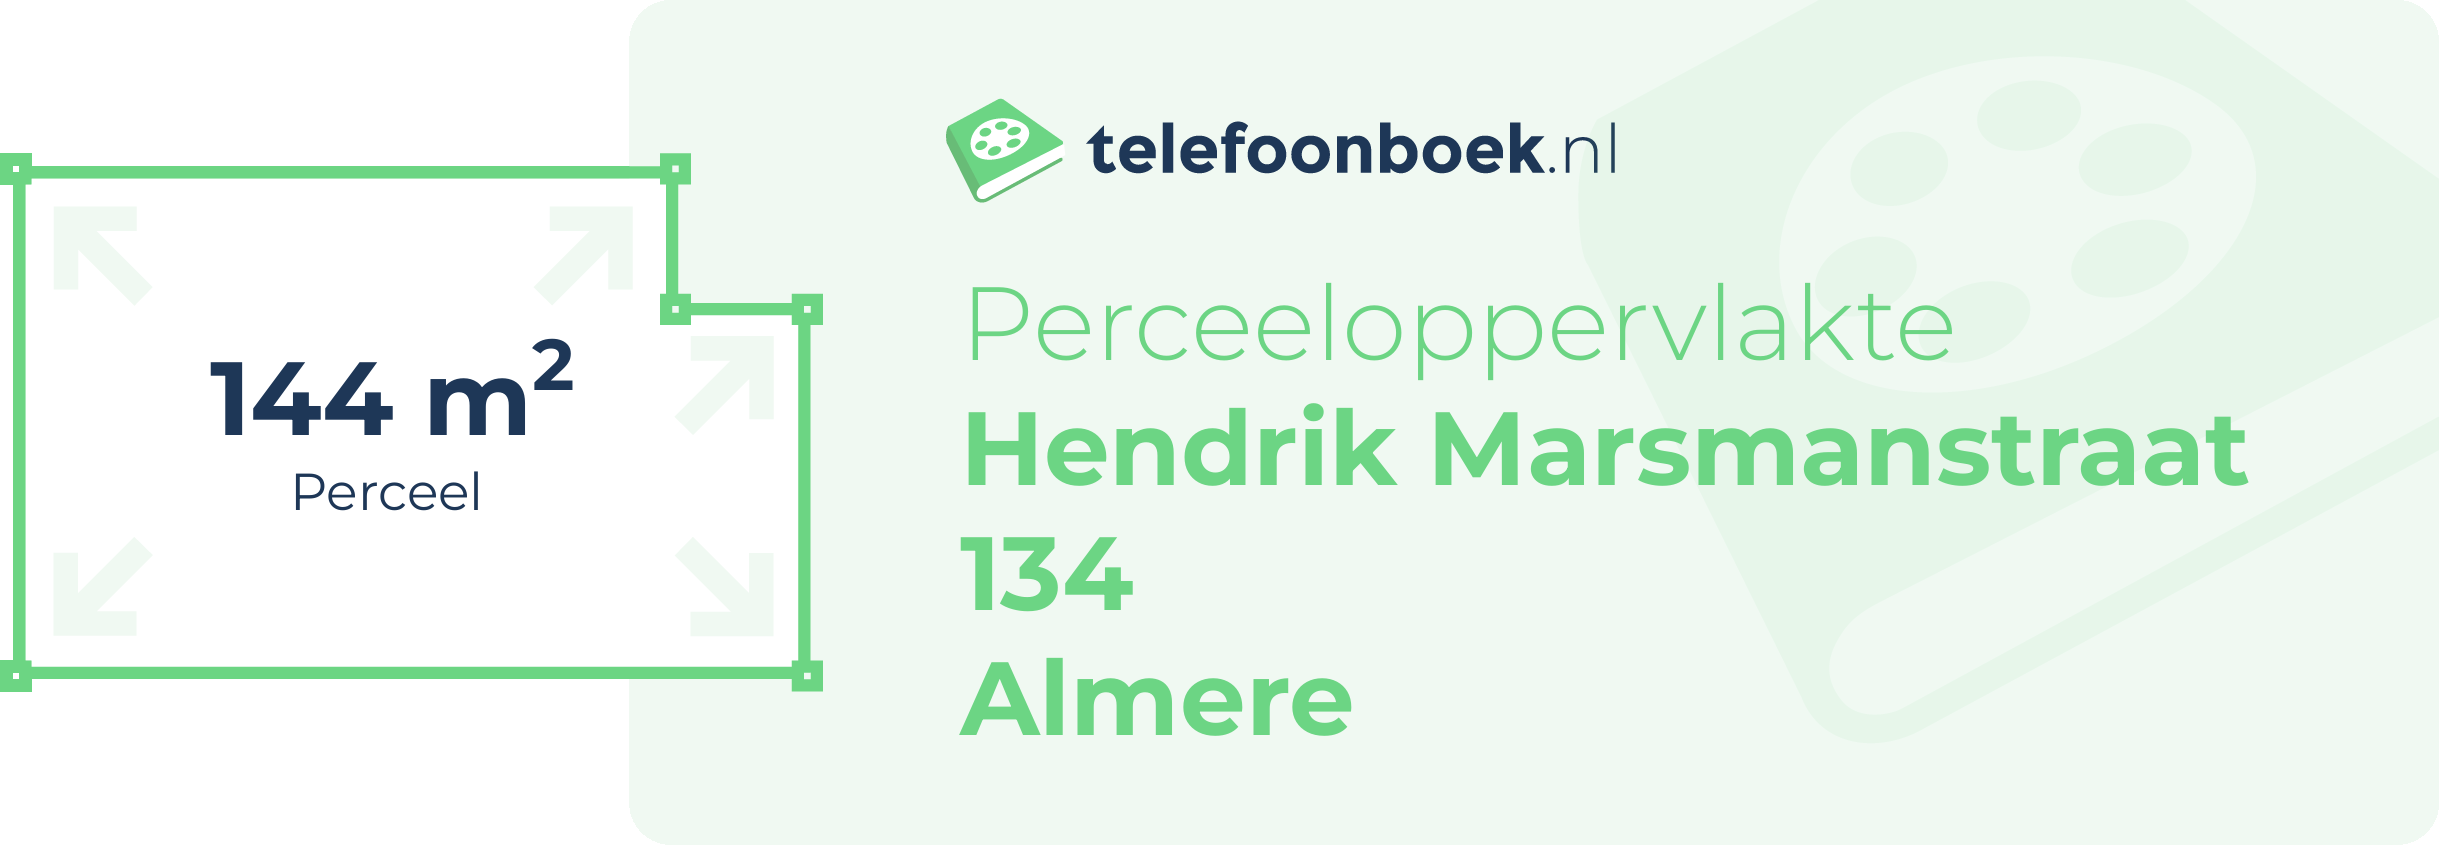 Perceeloppervlakte Hendrik Marsmanstraat 134 Almere